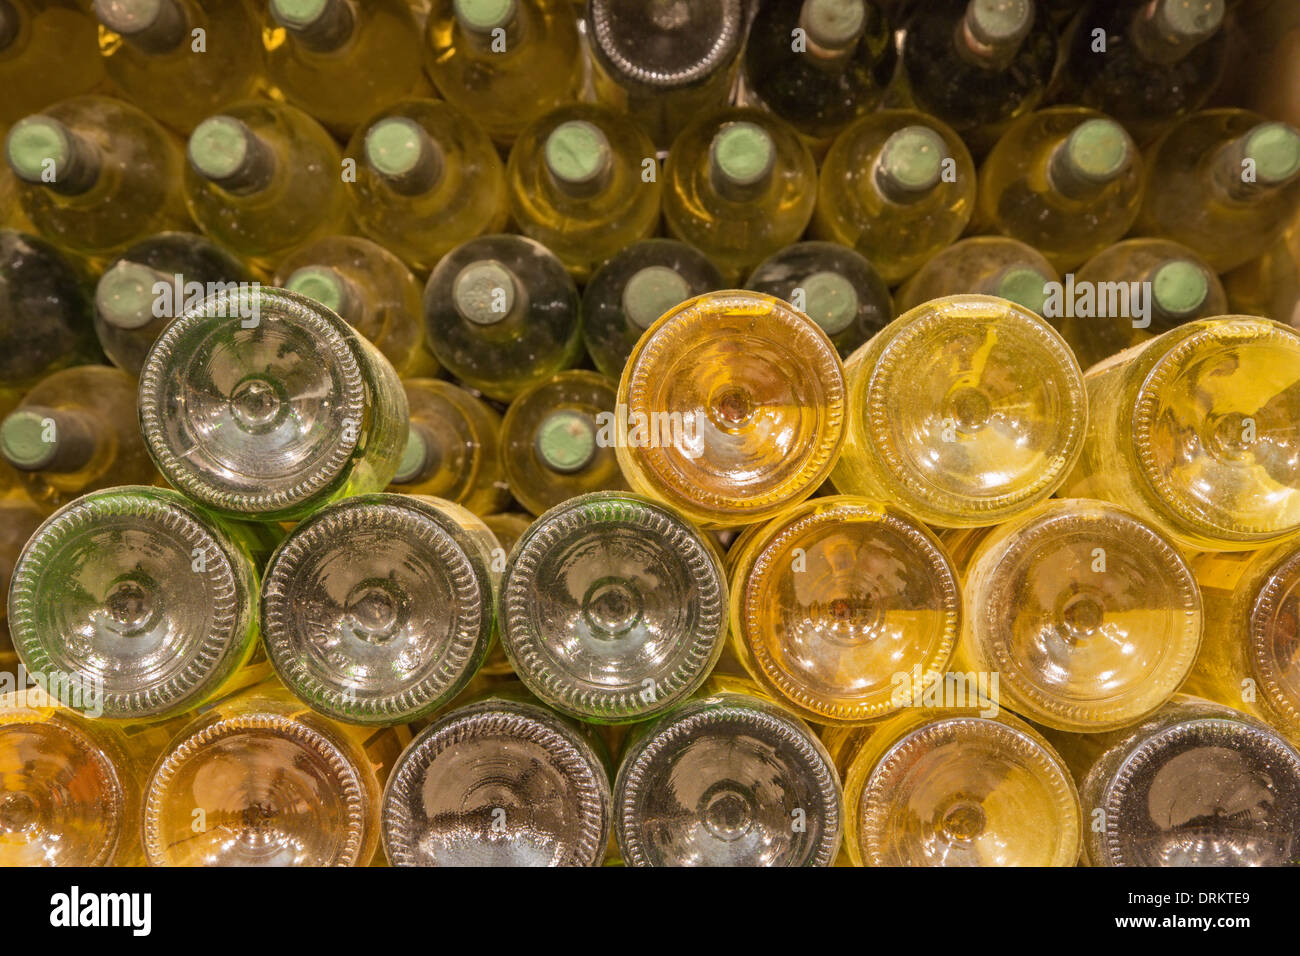 BRATISLAVA, SLOVAKIA - JANUARY 23, 2014: Detail of bottles from Interior of wine callar of great Slovak producer. Stock Photo